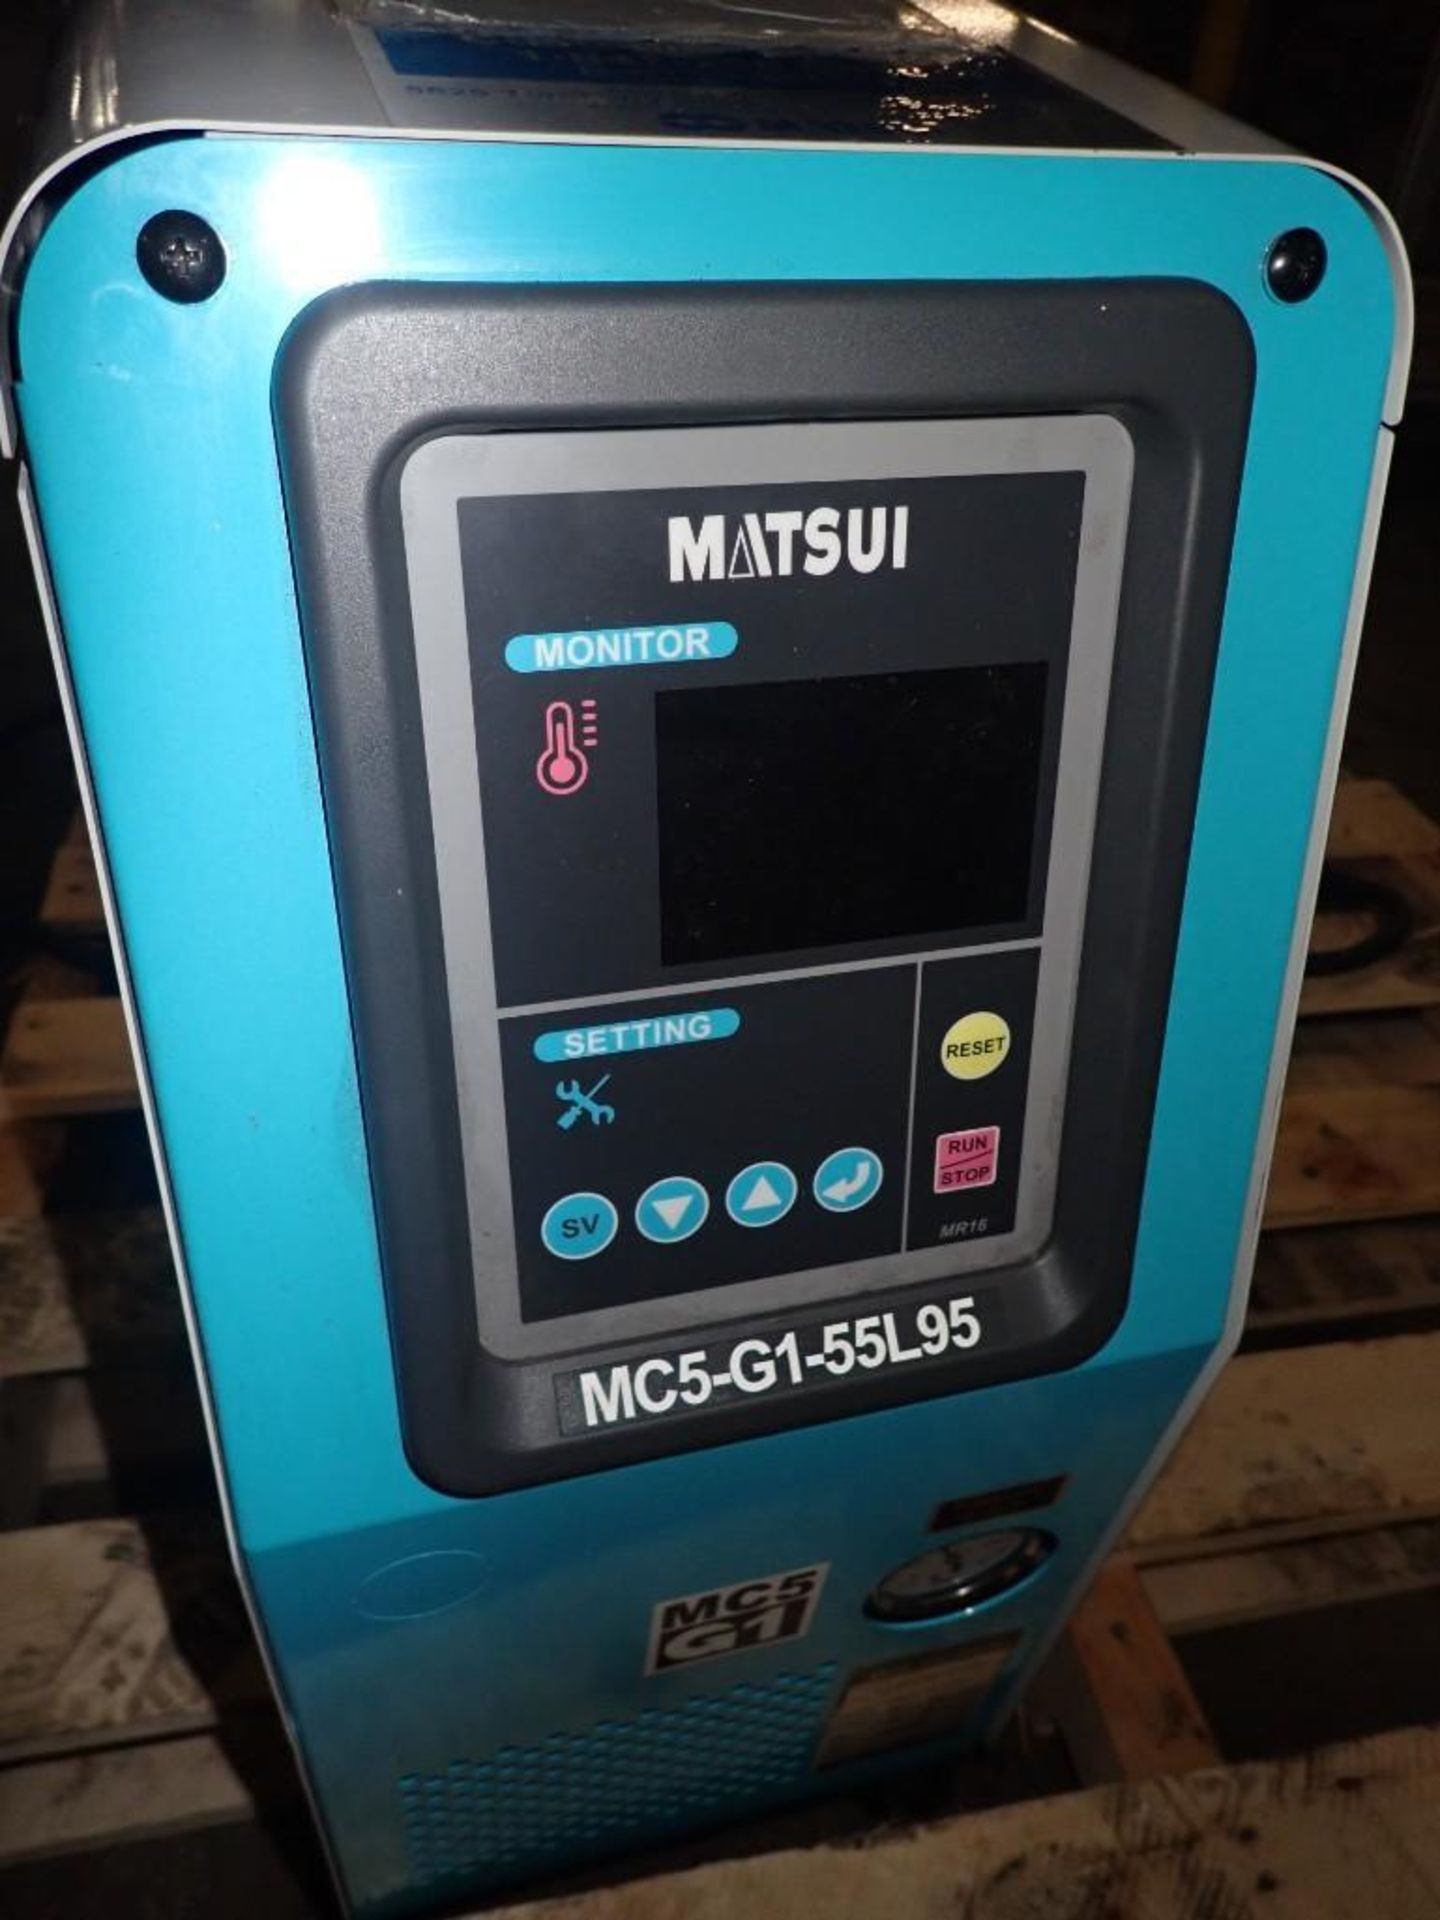 Matsui #MC5-G1-55L95 Temperature Controller - Image 4 of 5